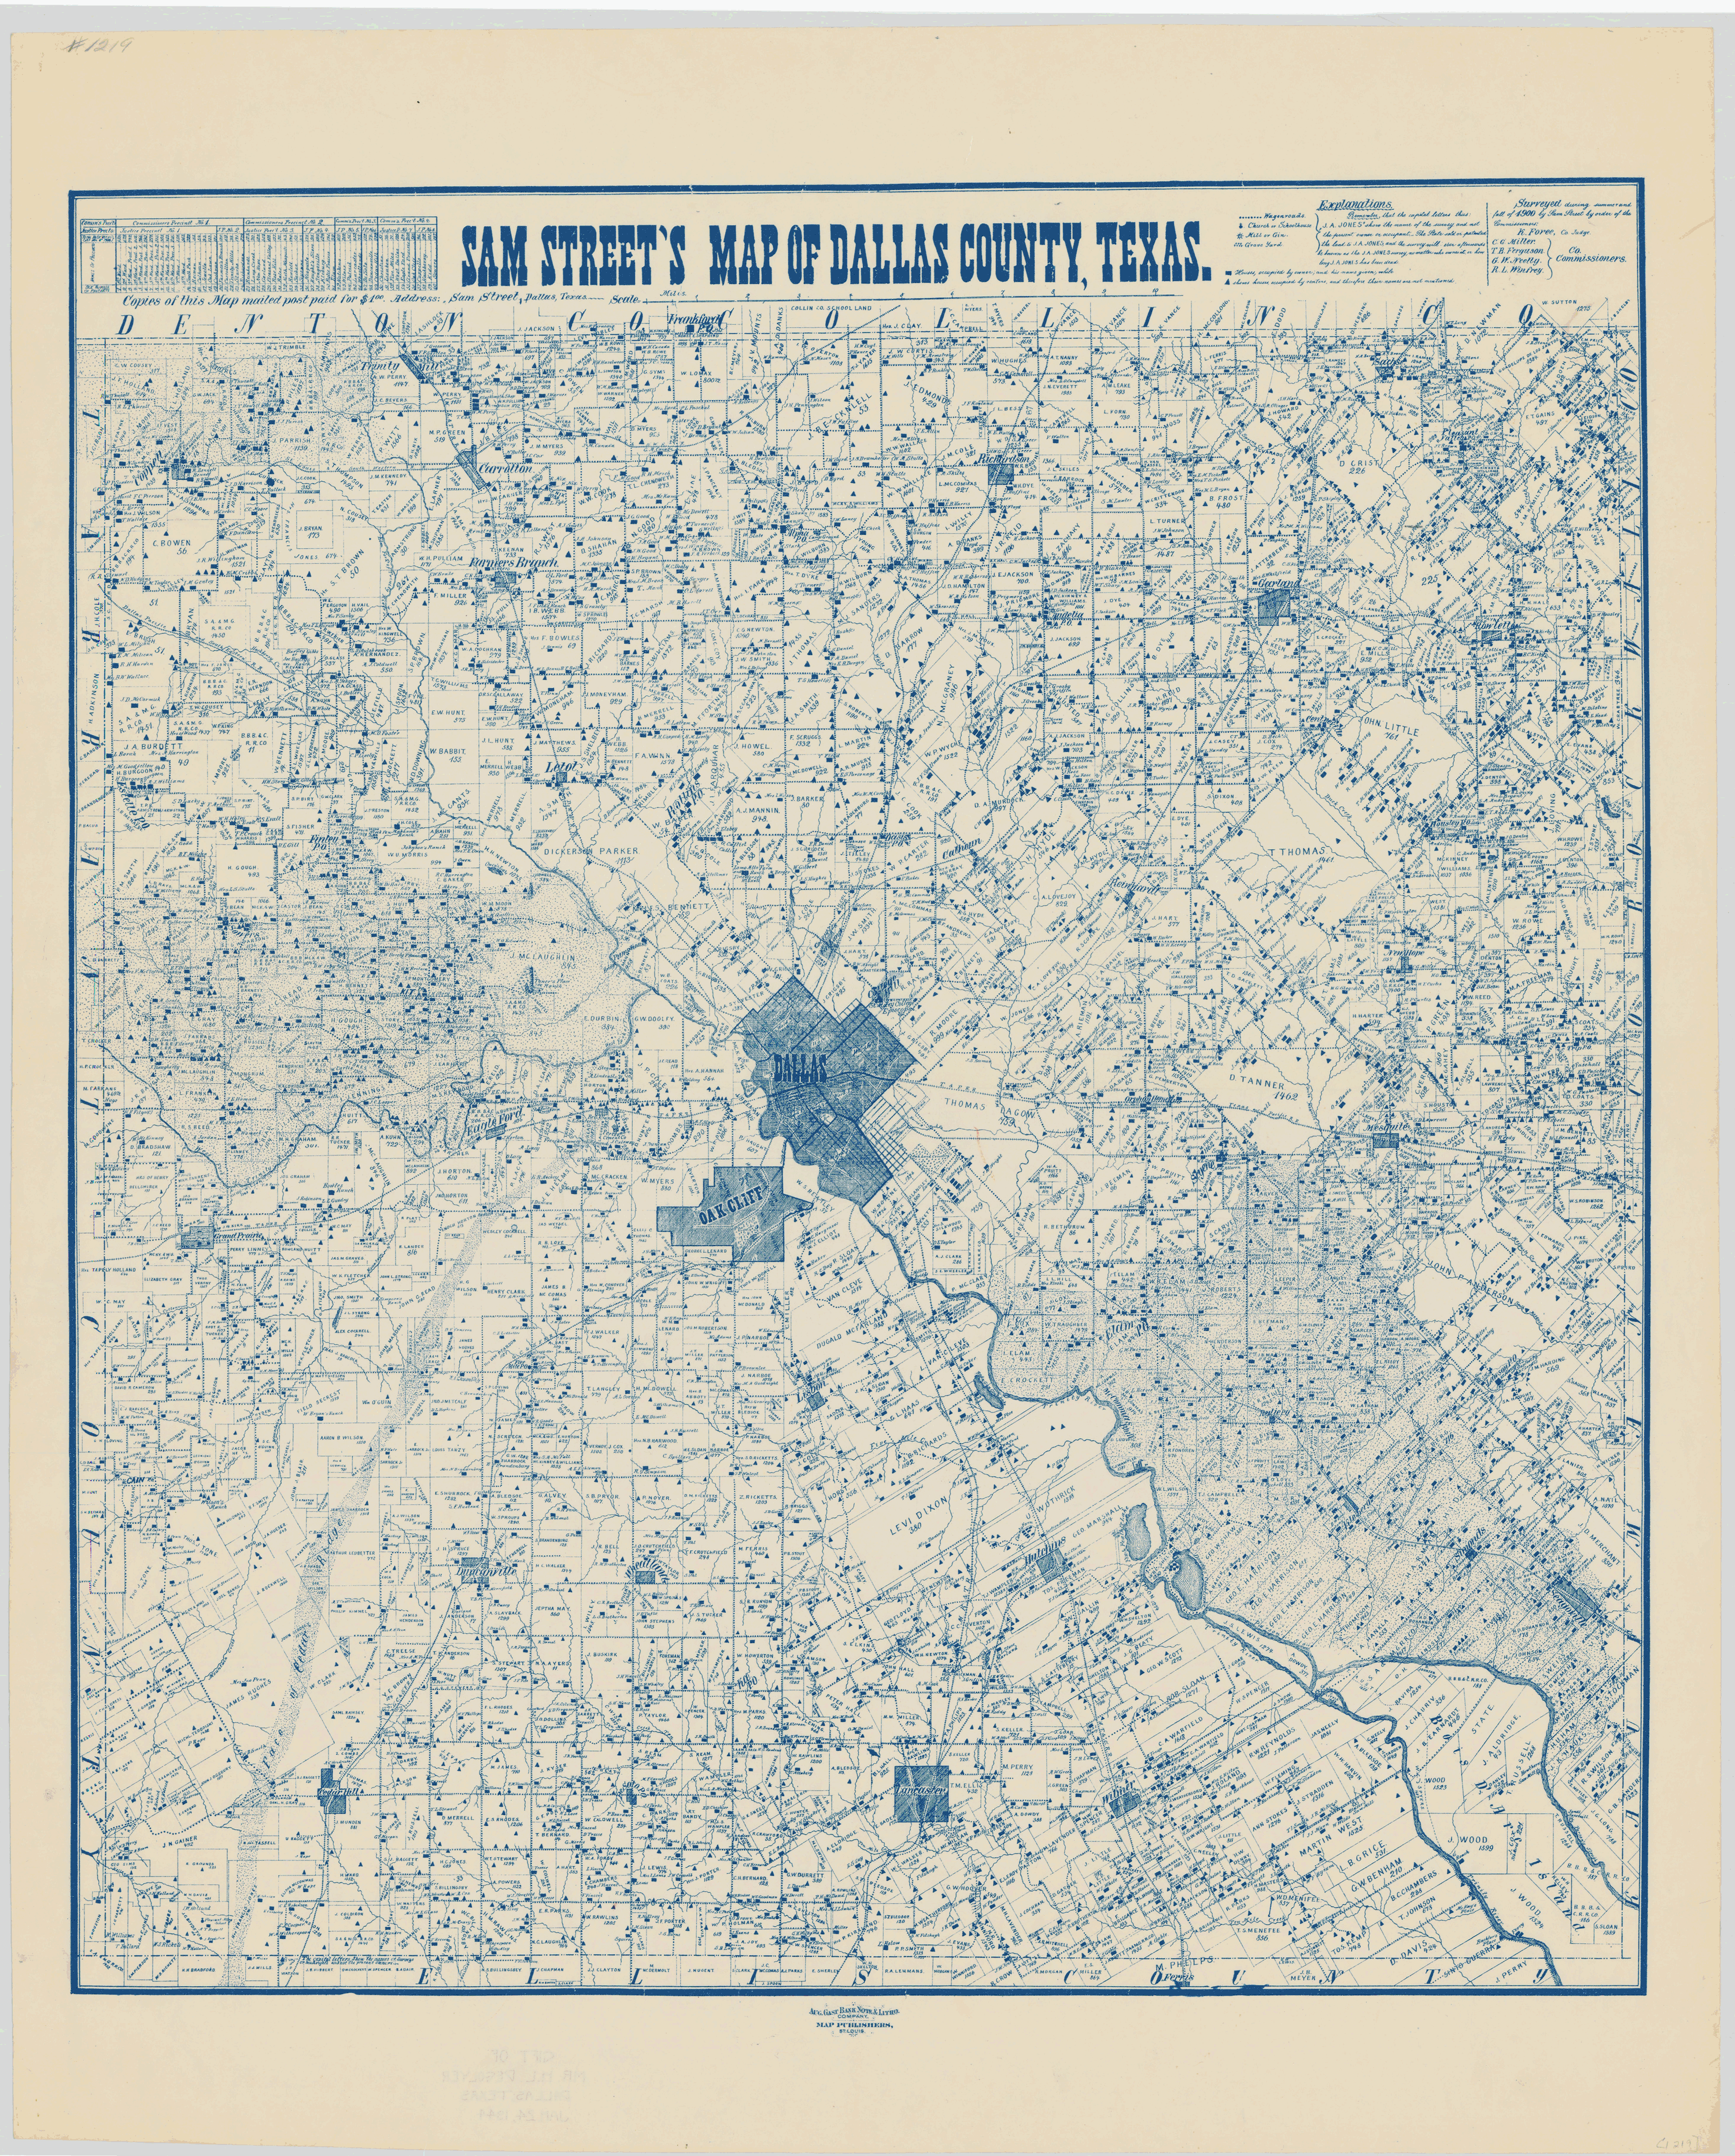 Sam Street's Map of Dallas County